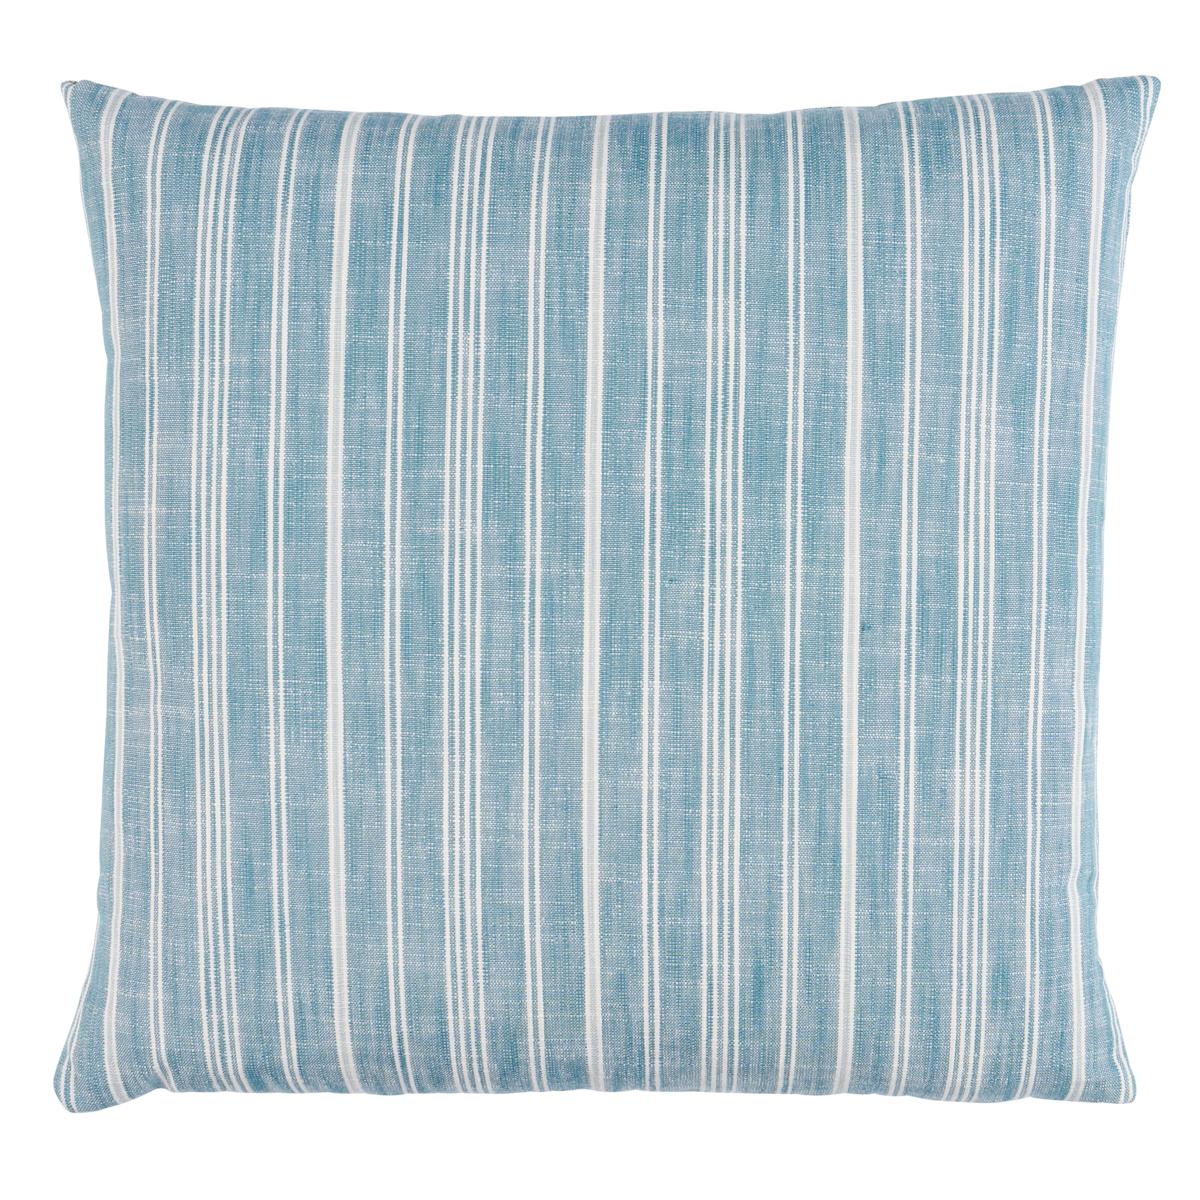 Lucy Stripe Pillow in Indigo 22 x 22"